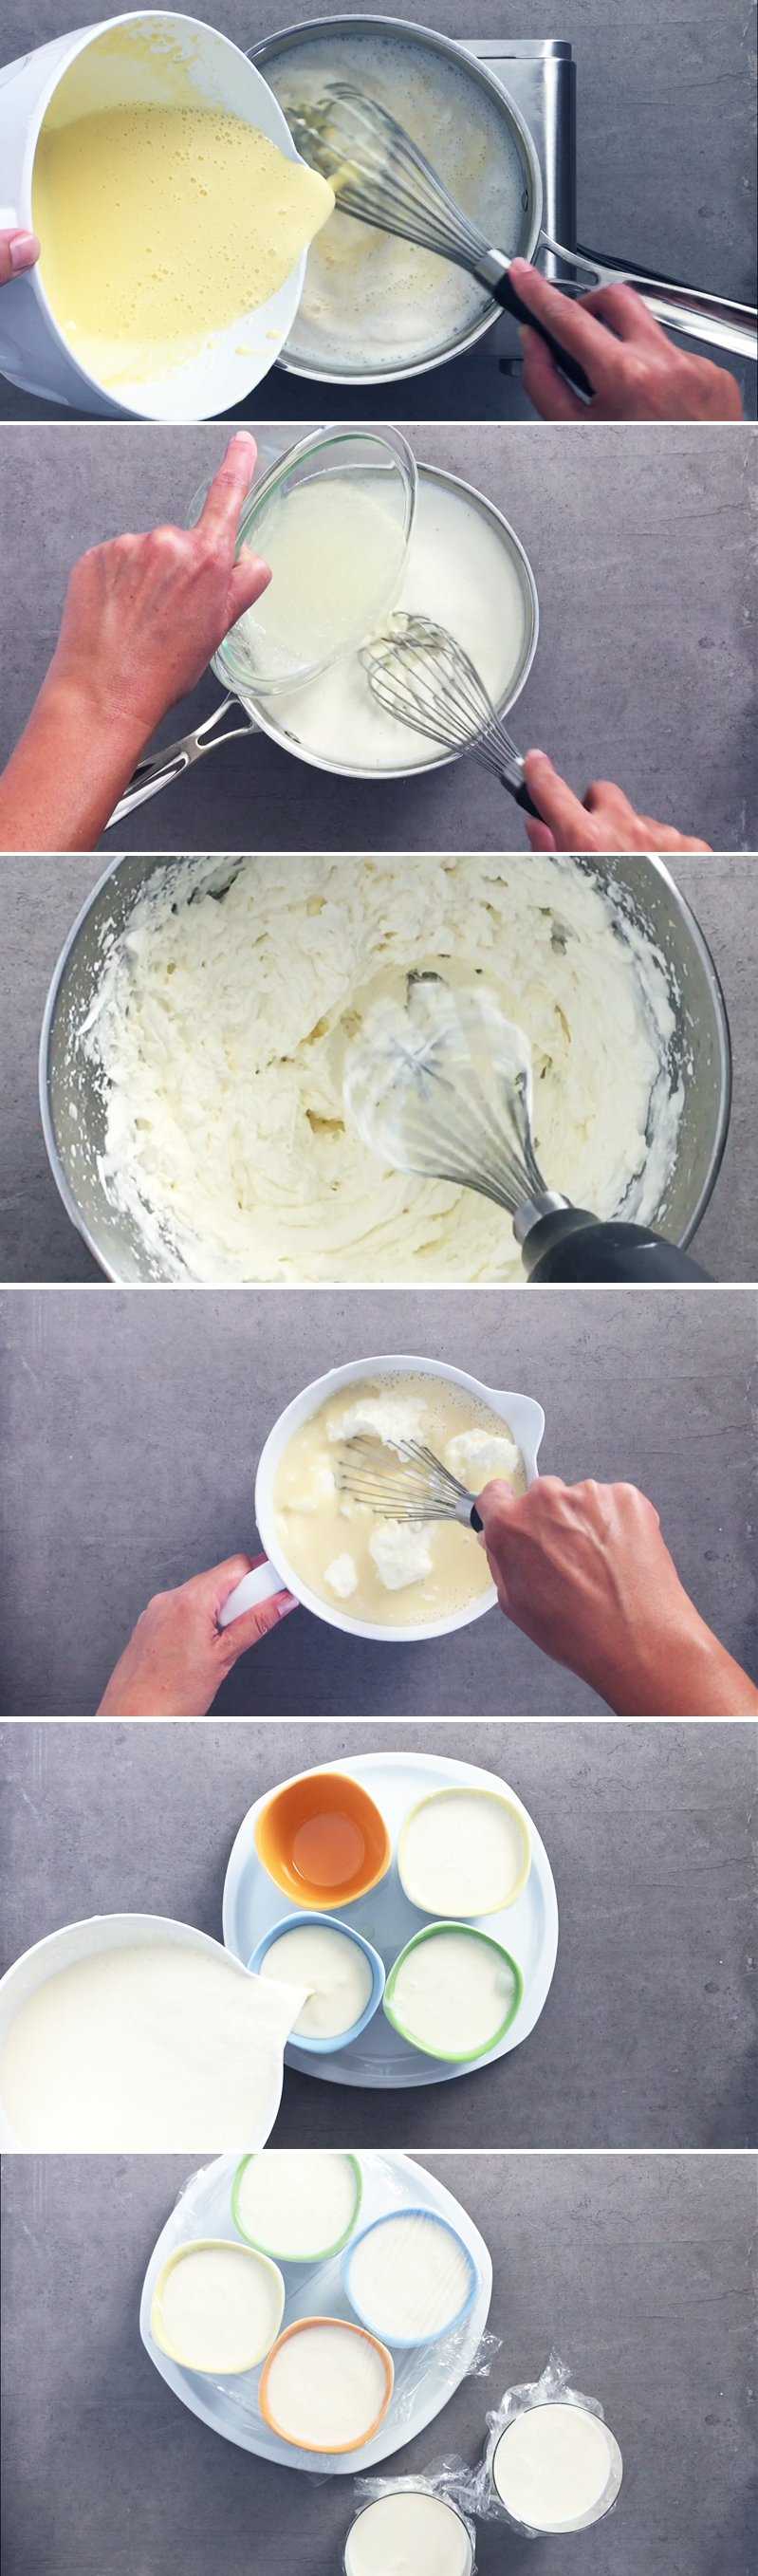 Steps to make Bavarian Cream part 2